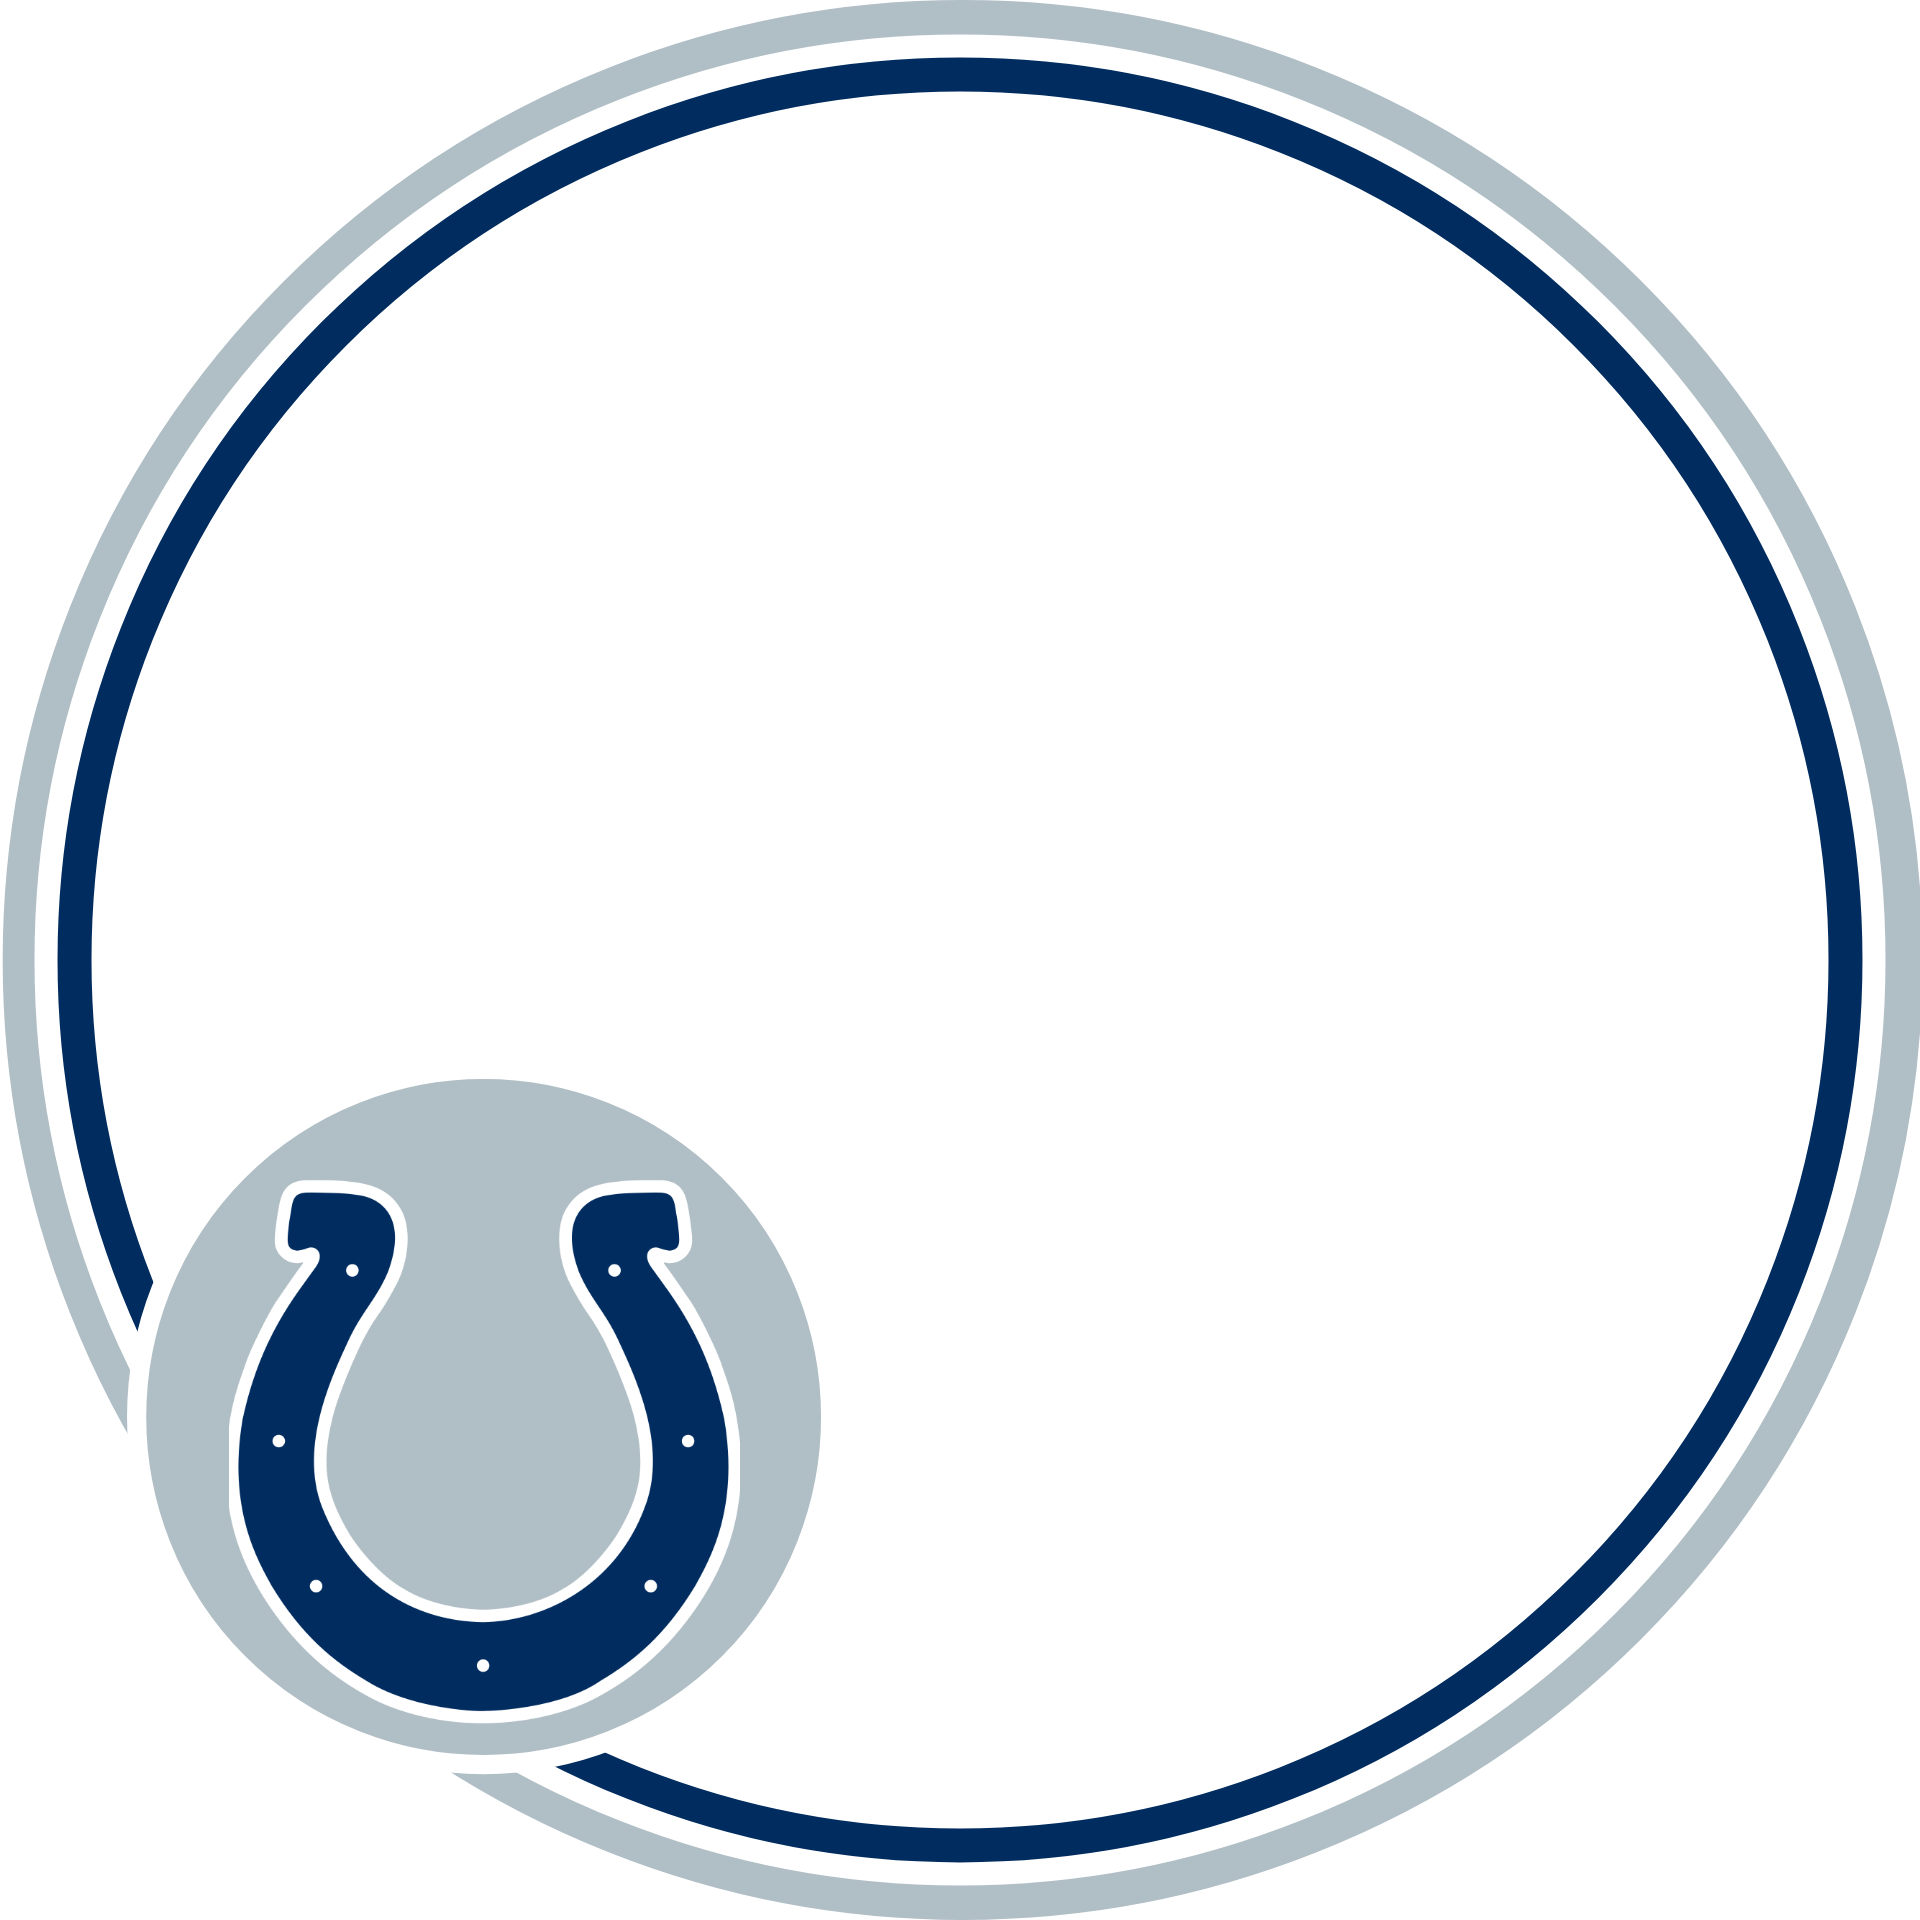 Colts Logo PNG Image HD